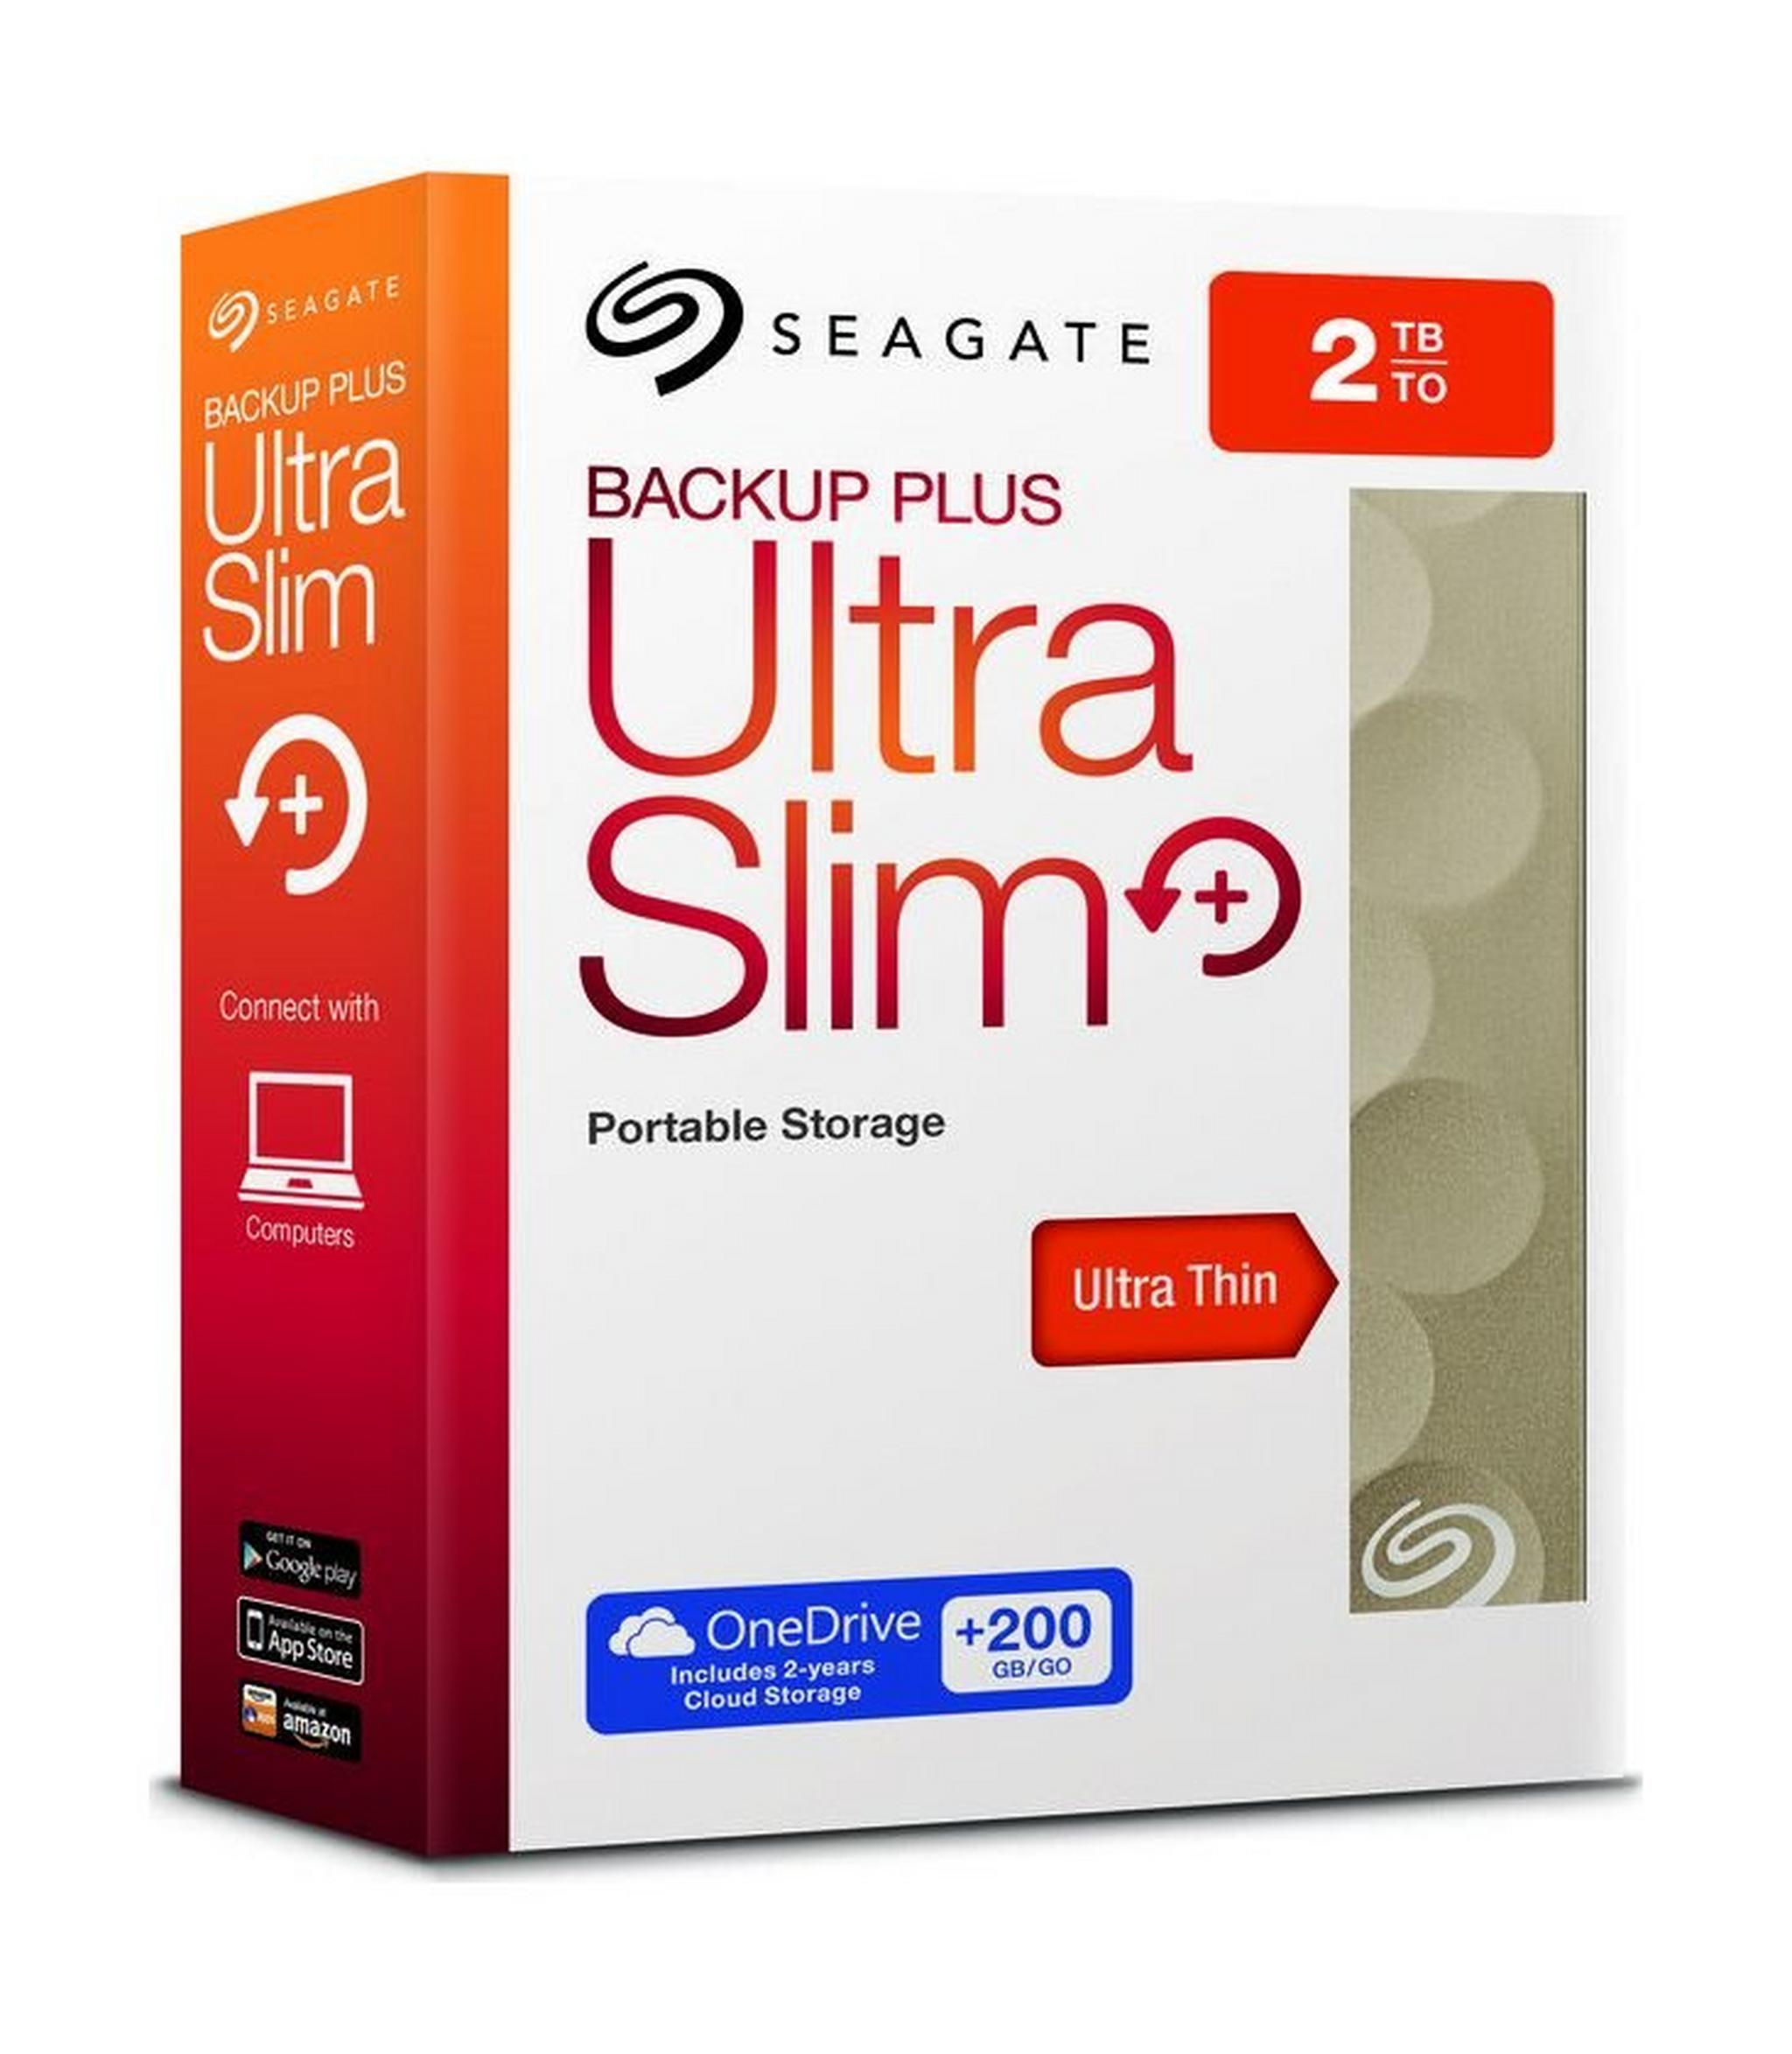 Seagate Backup Plus Ultra Slim 2TB External Hard Drive (STEH2000201) – Gold